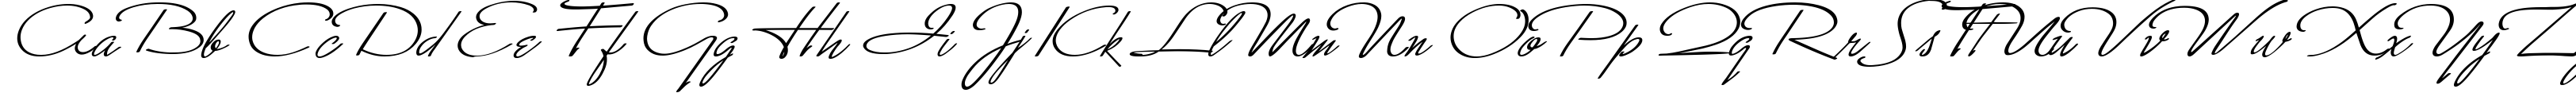 Пример написания английского алфавита шрифтом Monika Italic